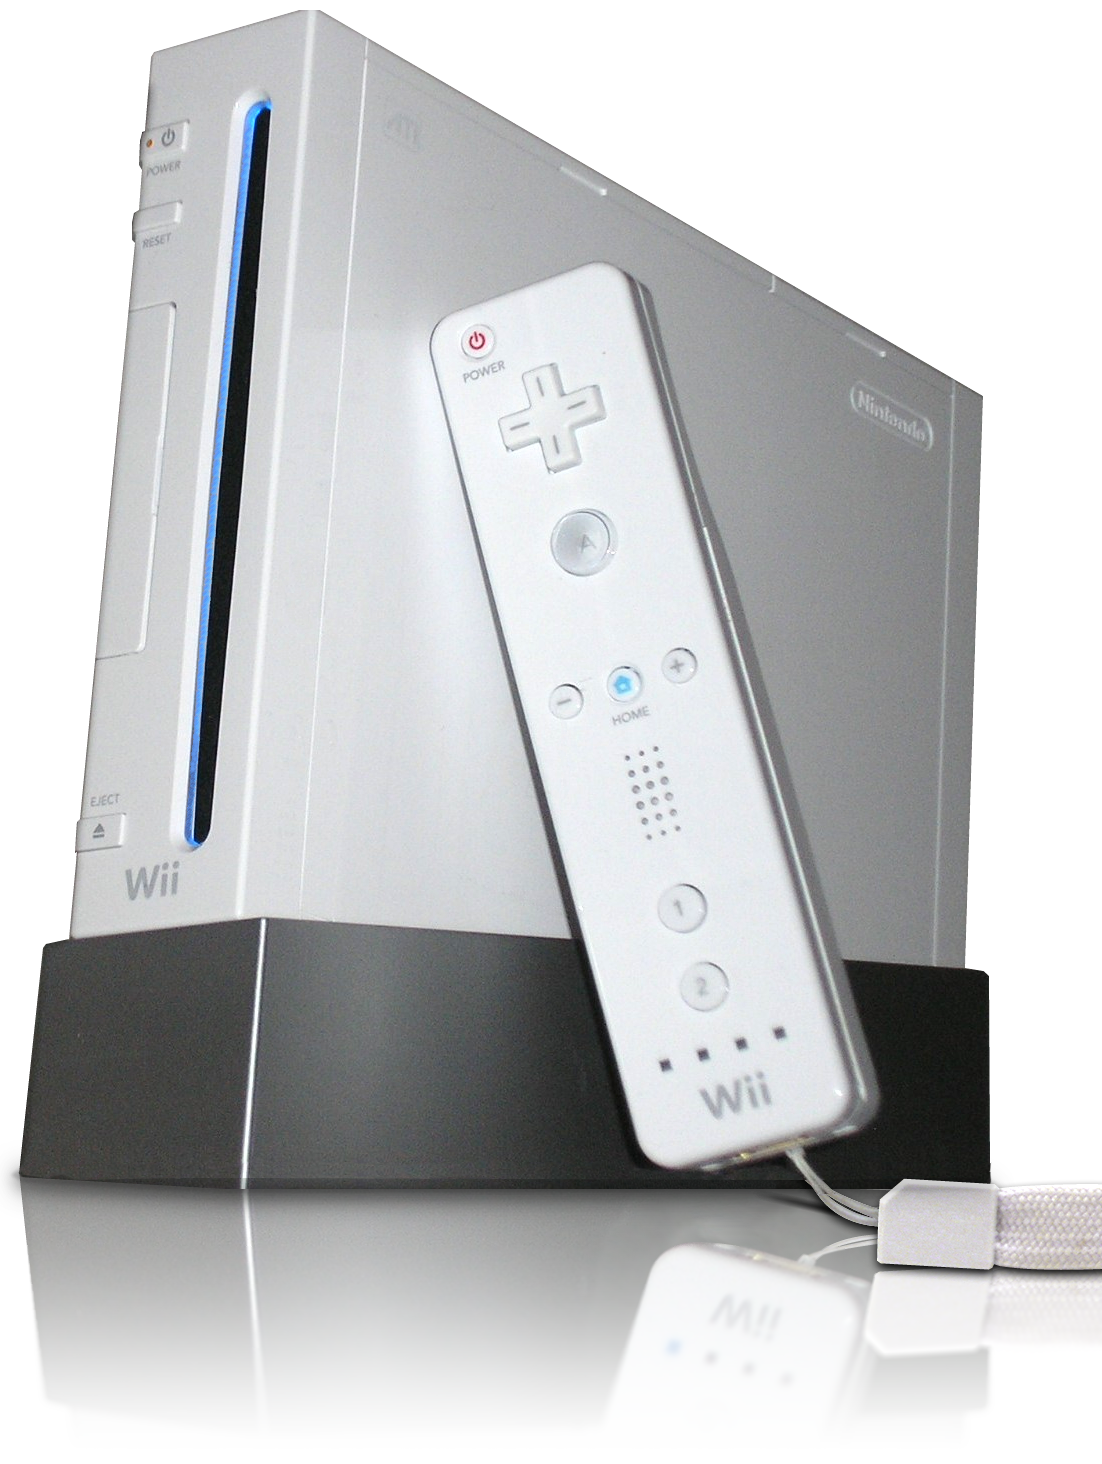 Emulador Nintendo Wii Pc Download